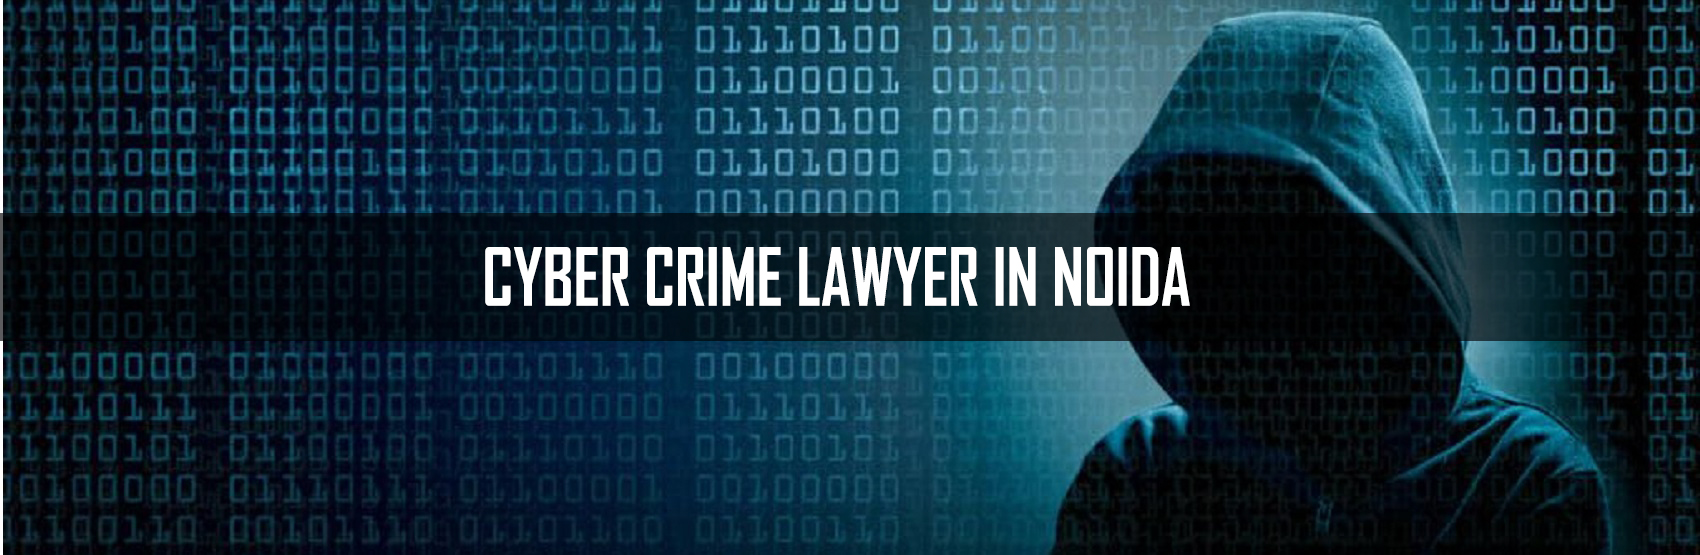 Cyber Crime Lawyer in Noida, Greater Noida, Ghaziabad, Meerut & Hapur